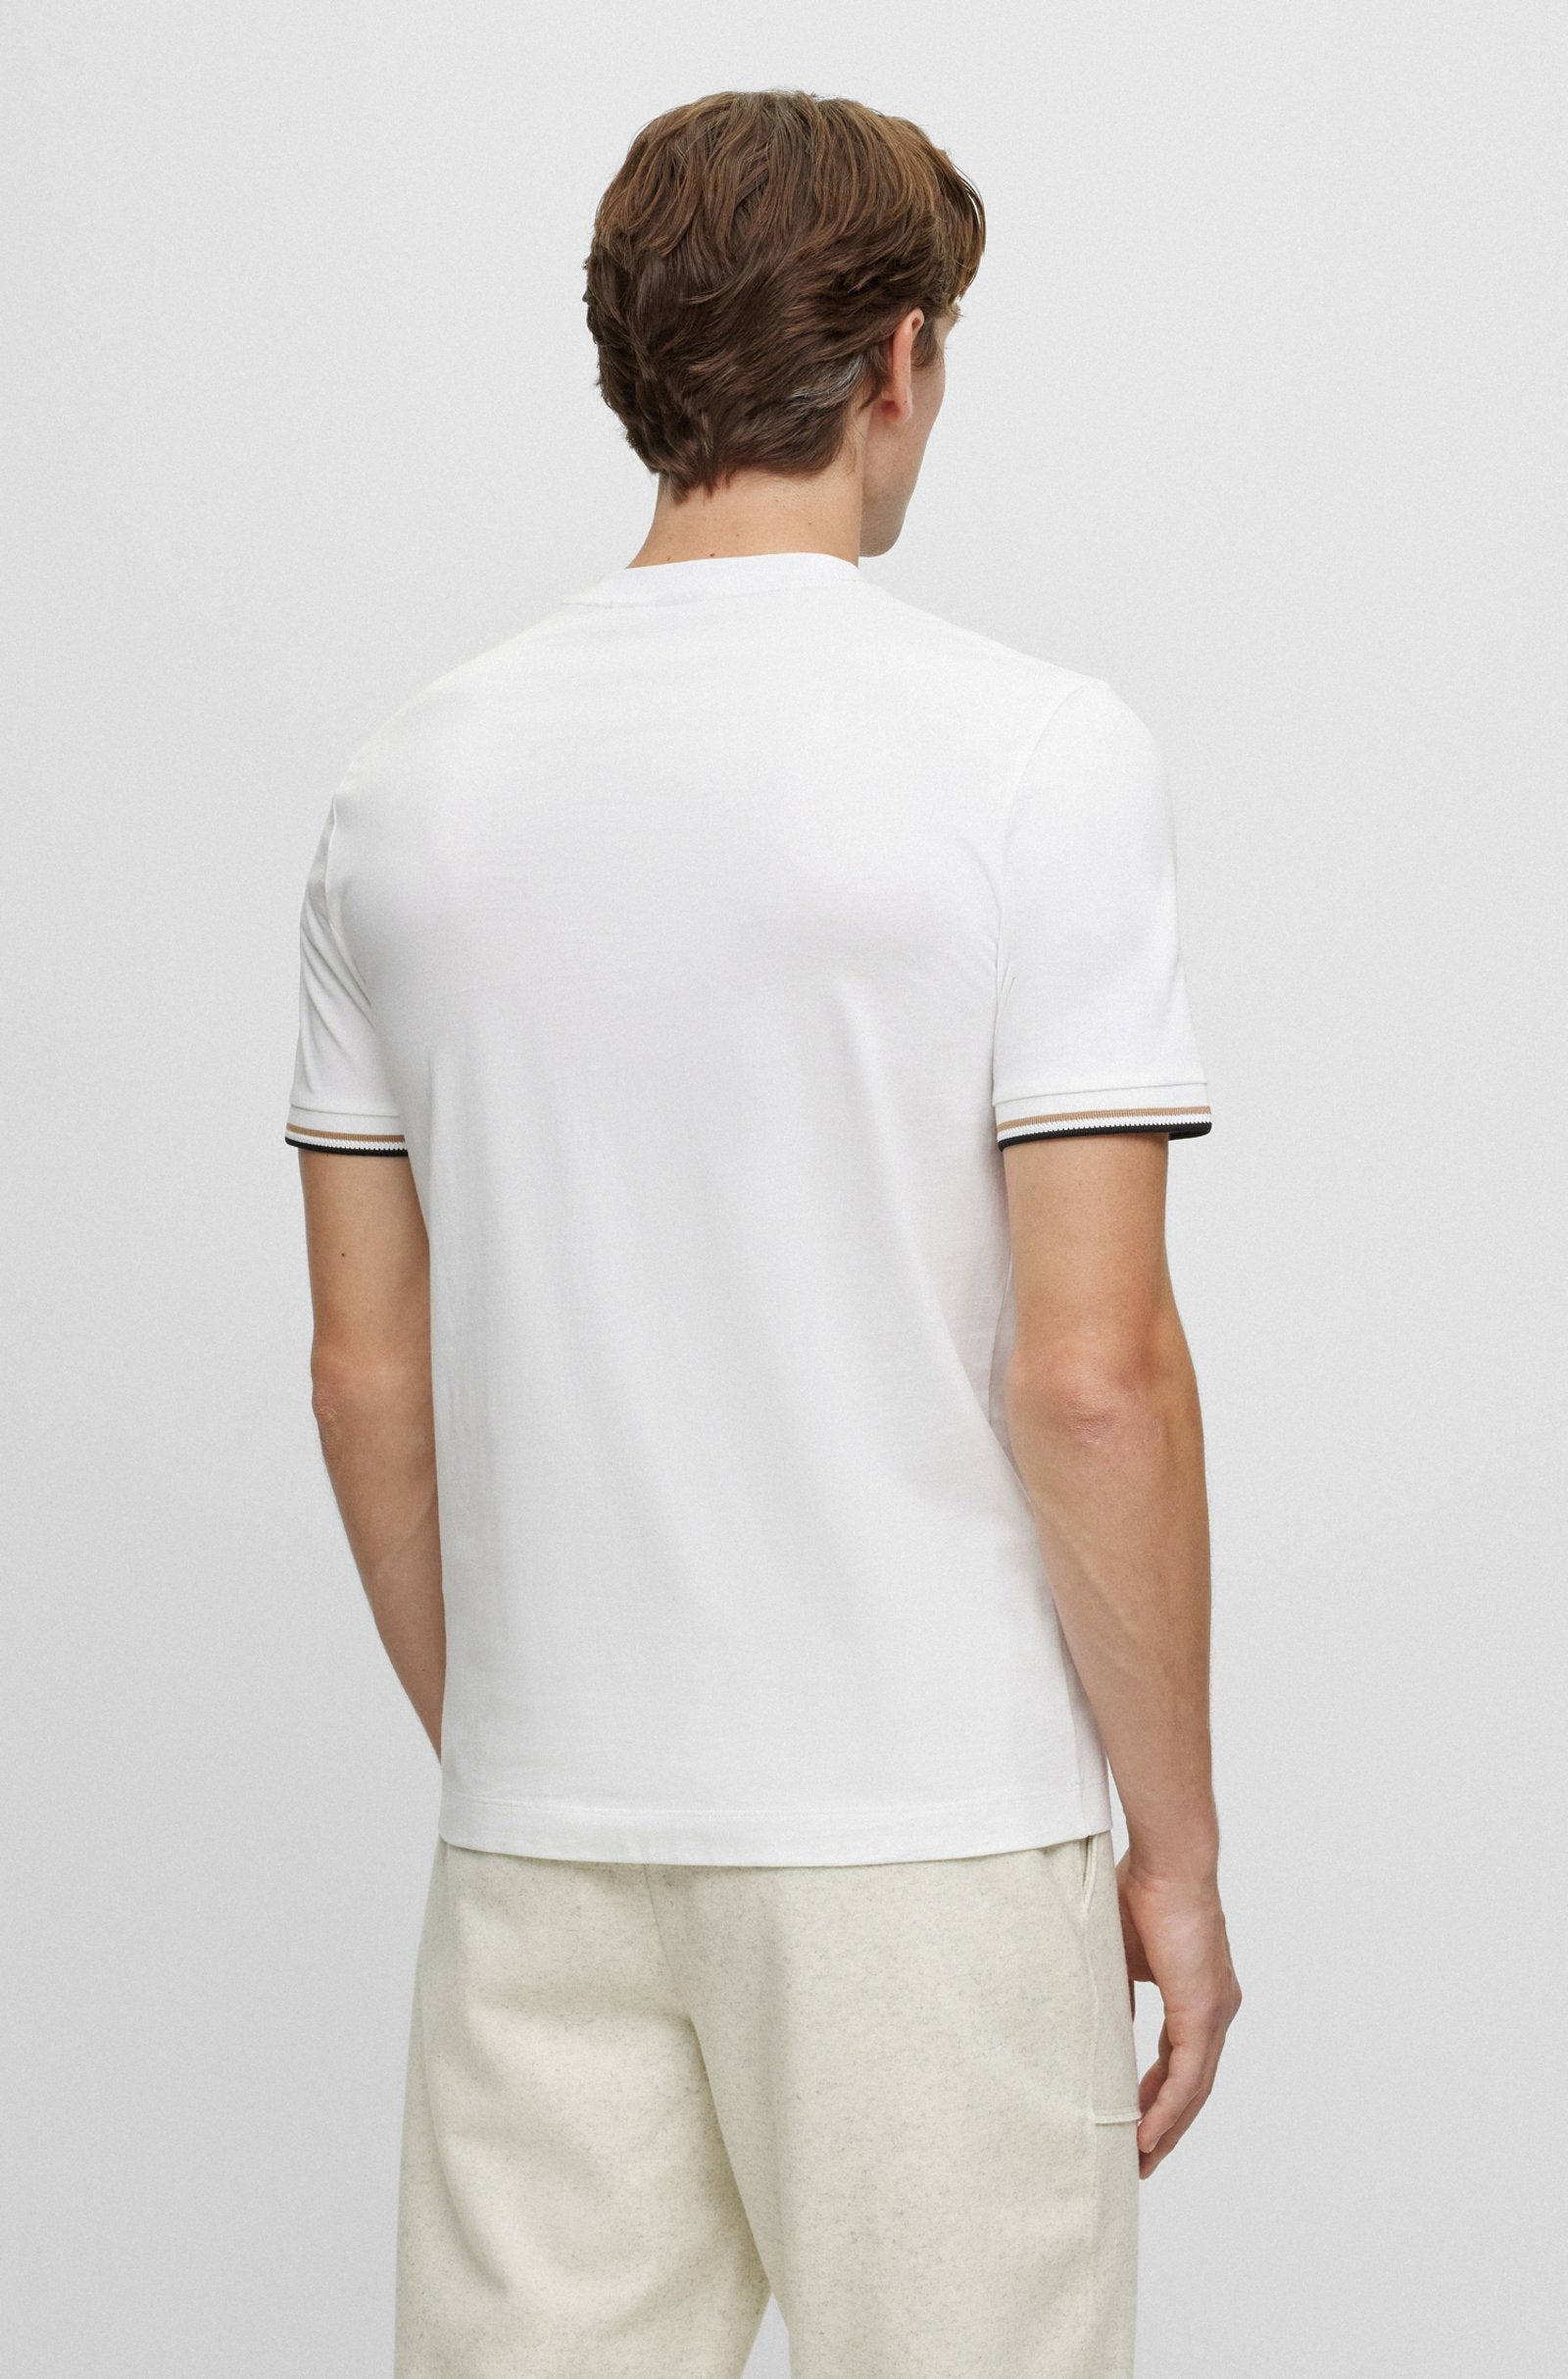 BOSS - THOMPSON 04 White Cotton Jersey T-Shirt With Signature Stripe Cuff Detail 50501097 100